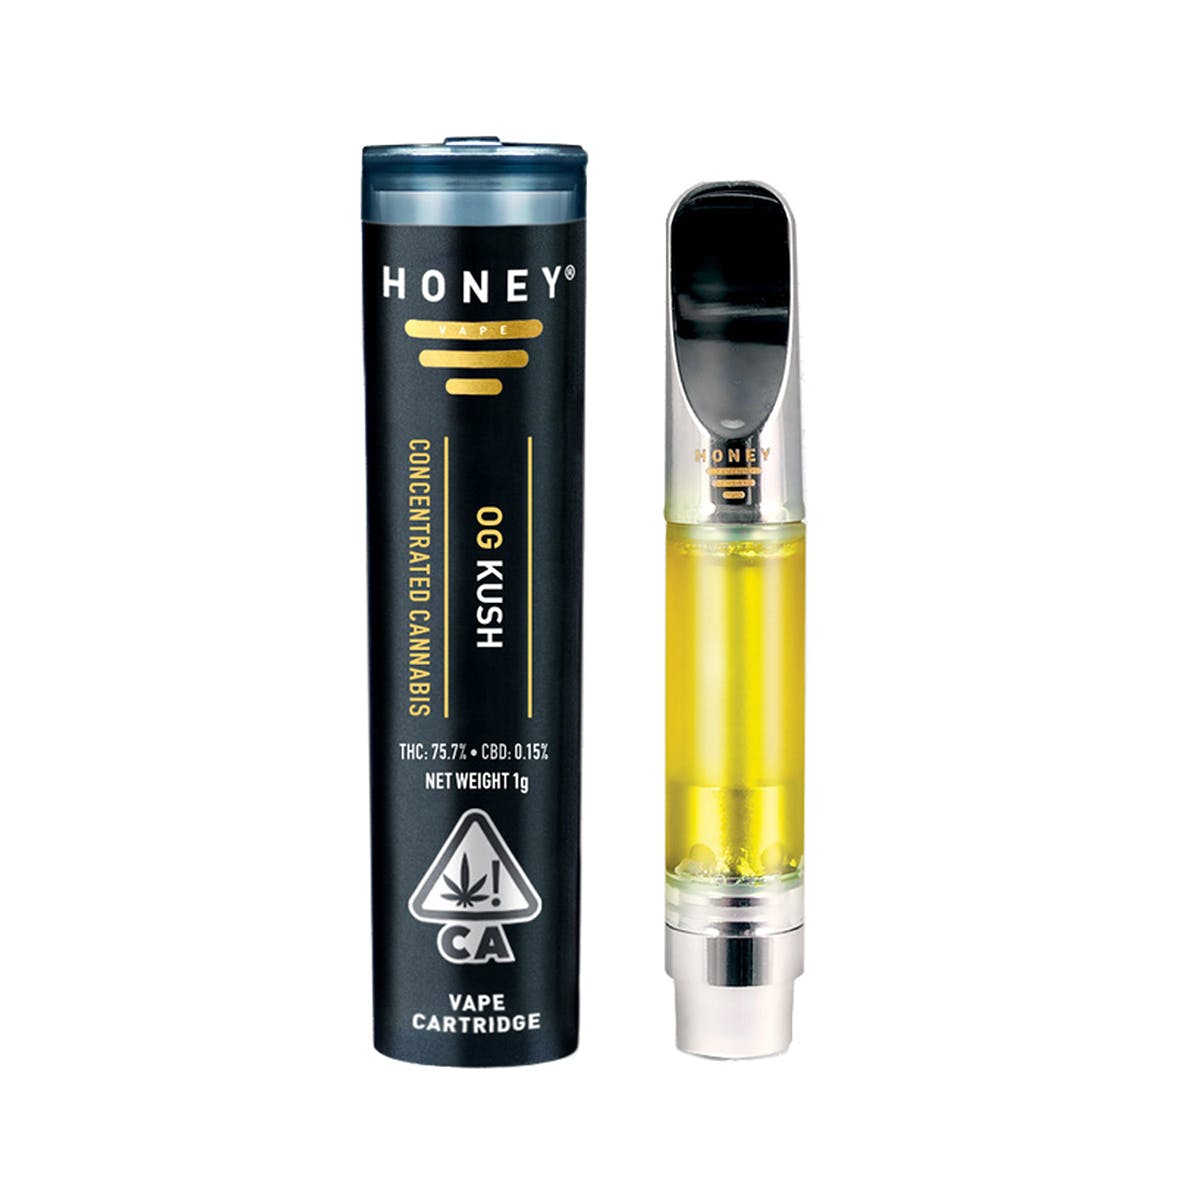 Honey® Premium Cartridge, OG Kush